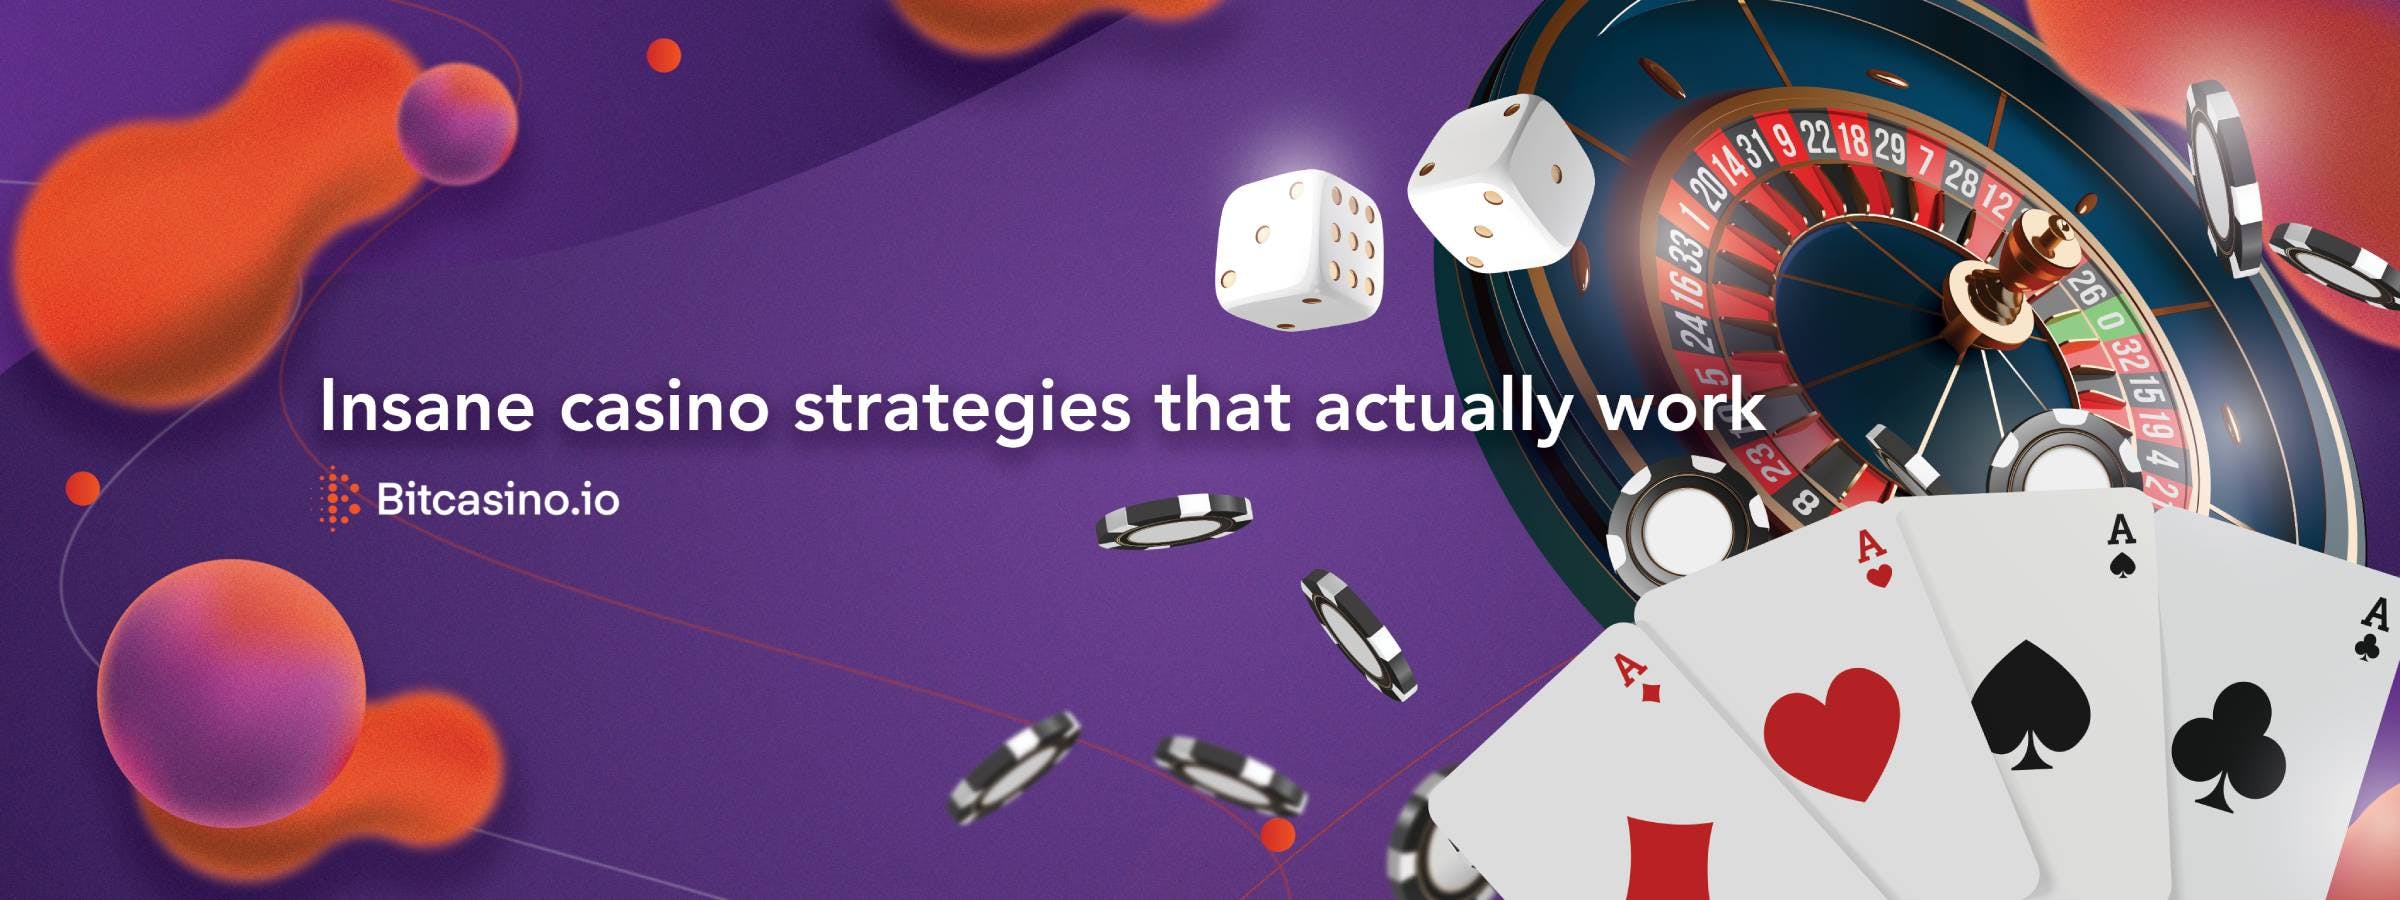 Insane casino strategies that actually work